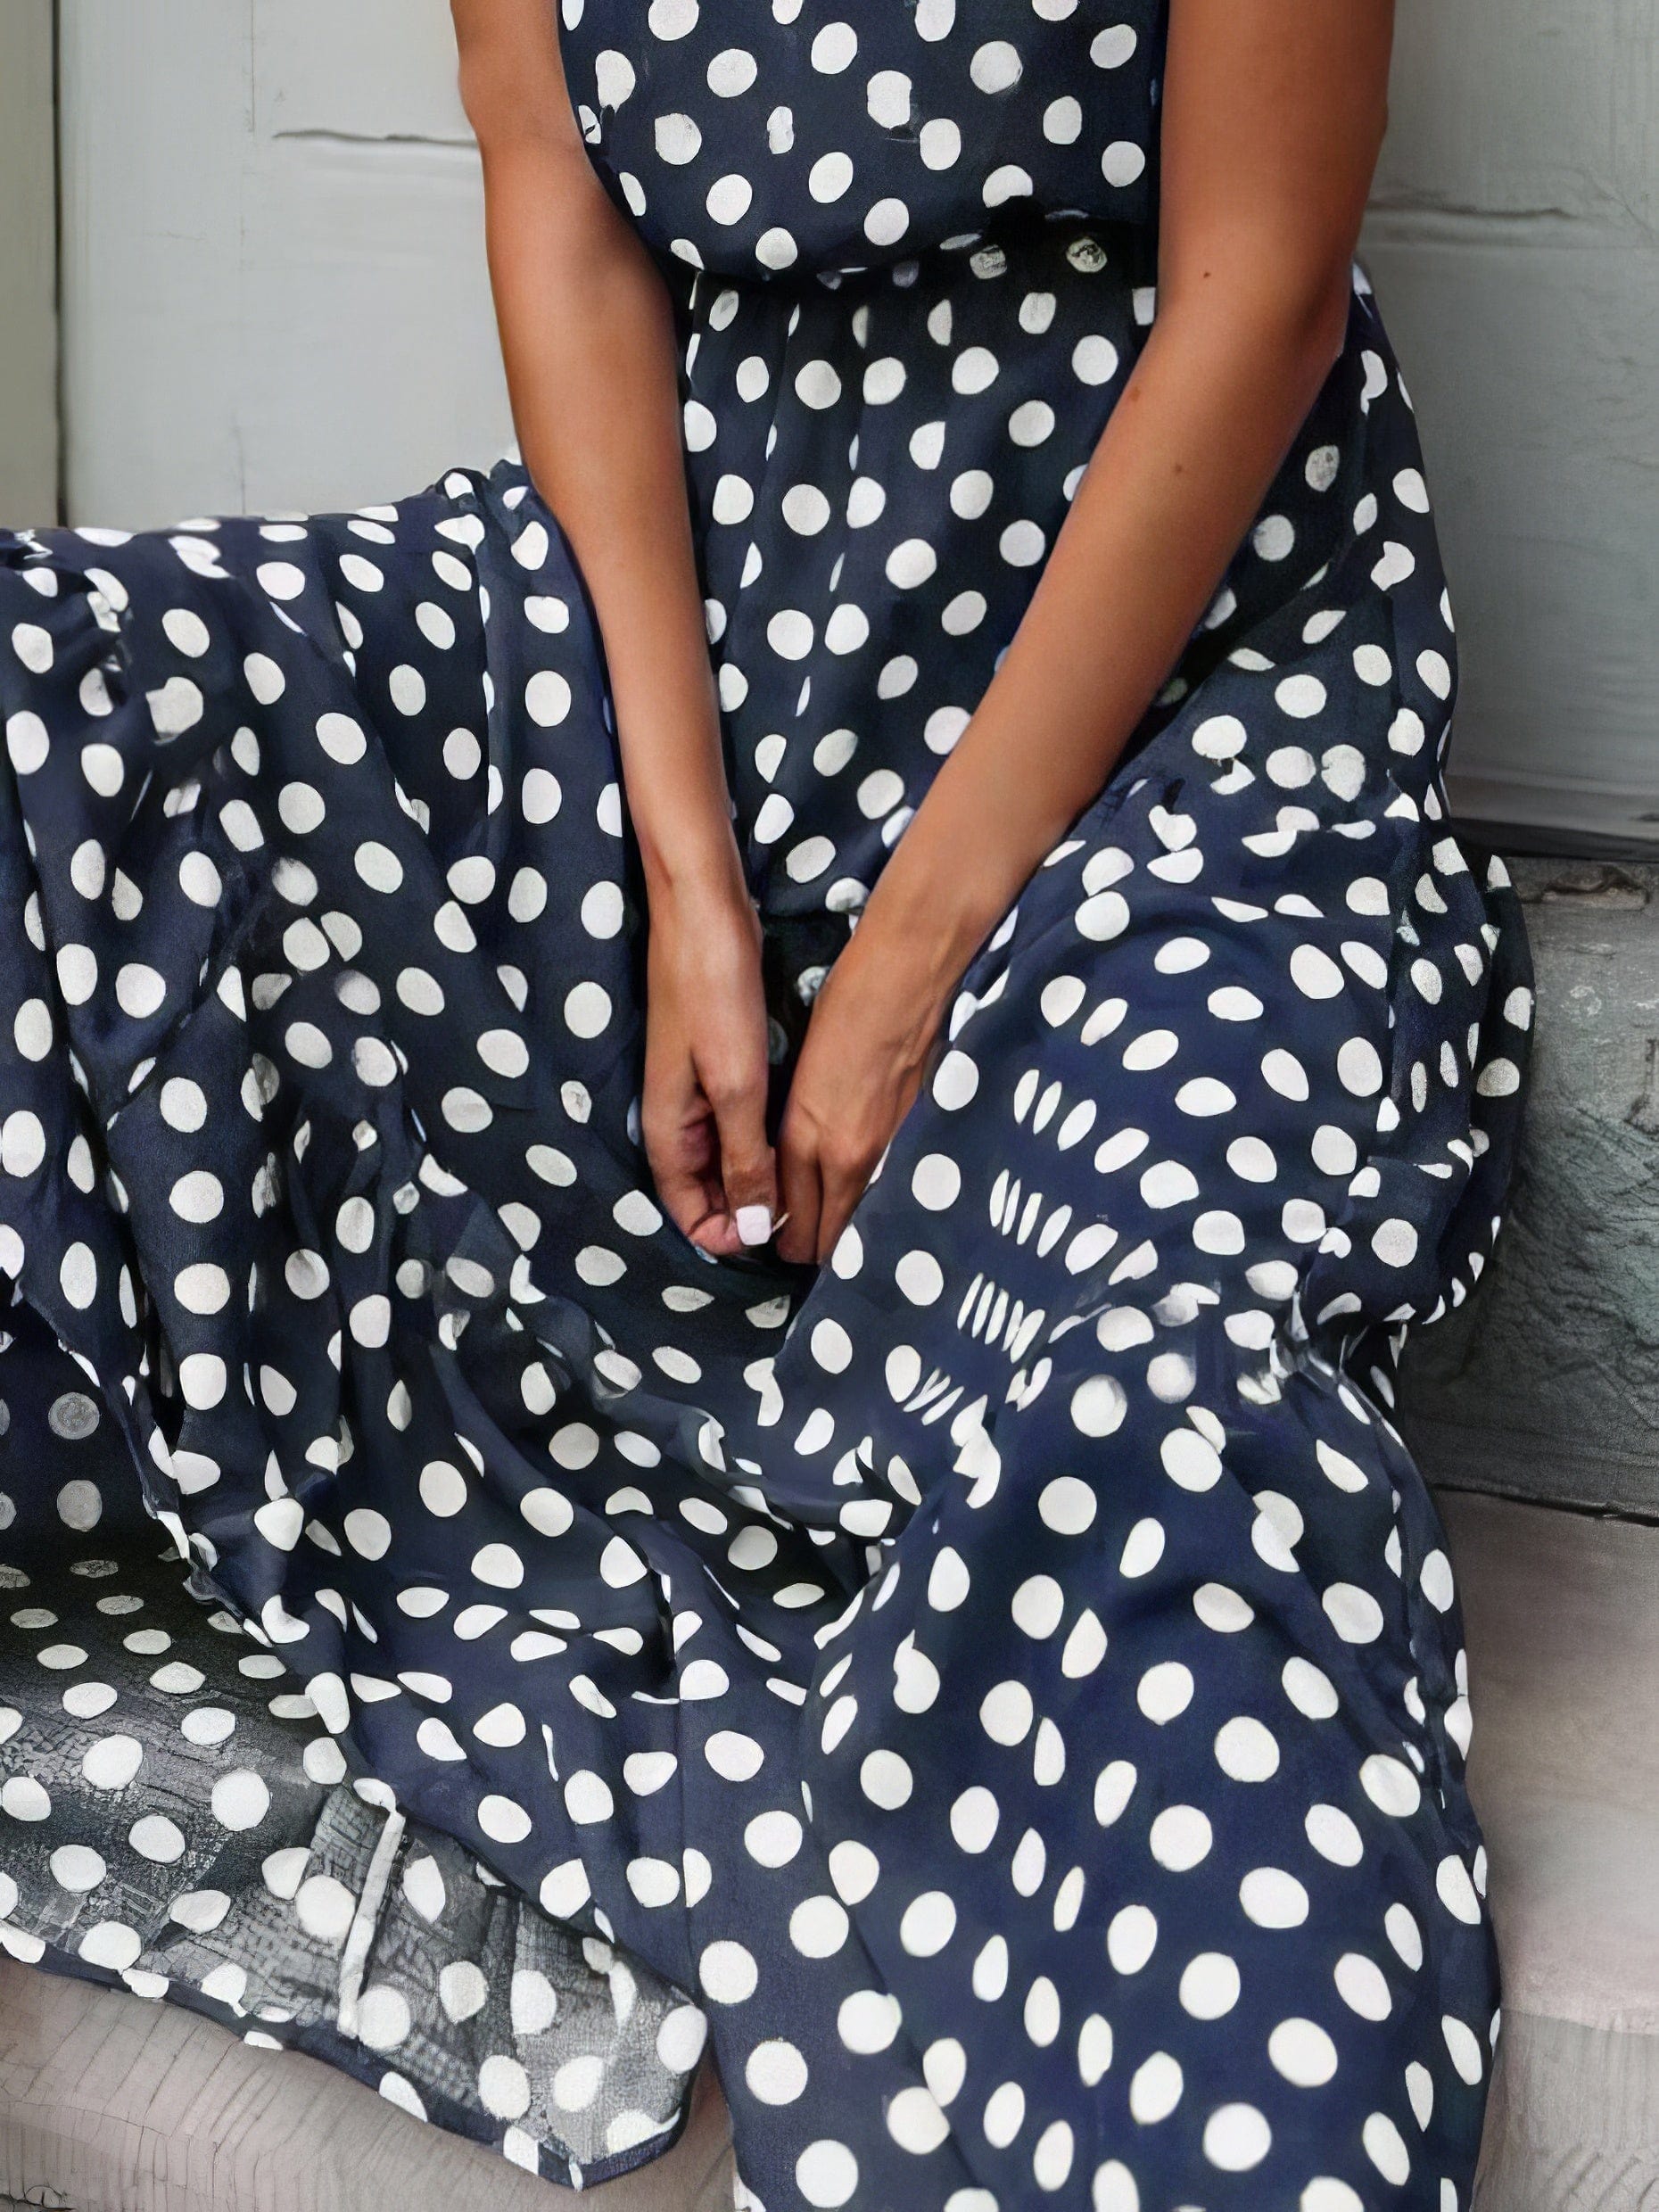 MsDressly Maxi Dresses Polka Dot Print Round Neck Casual Dress